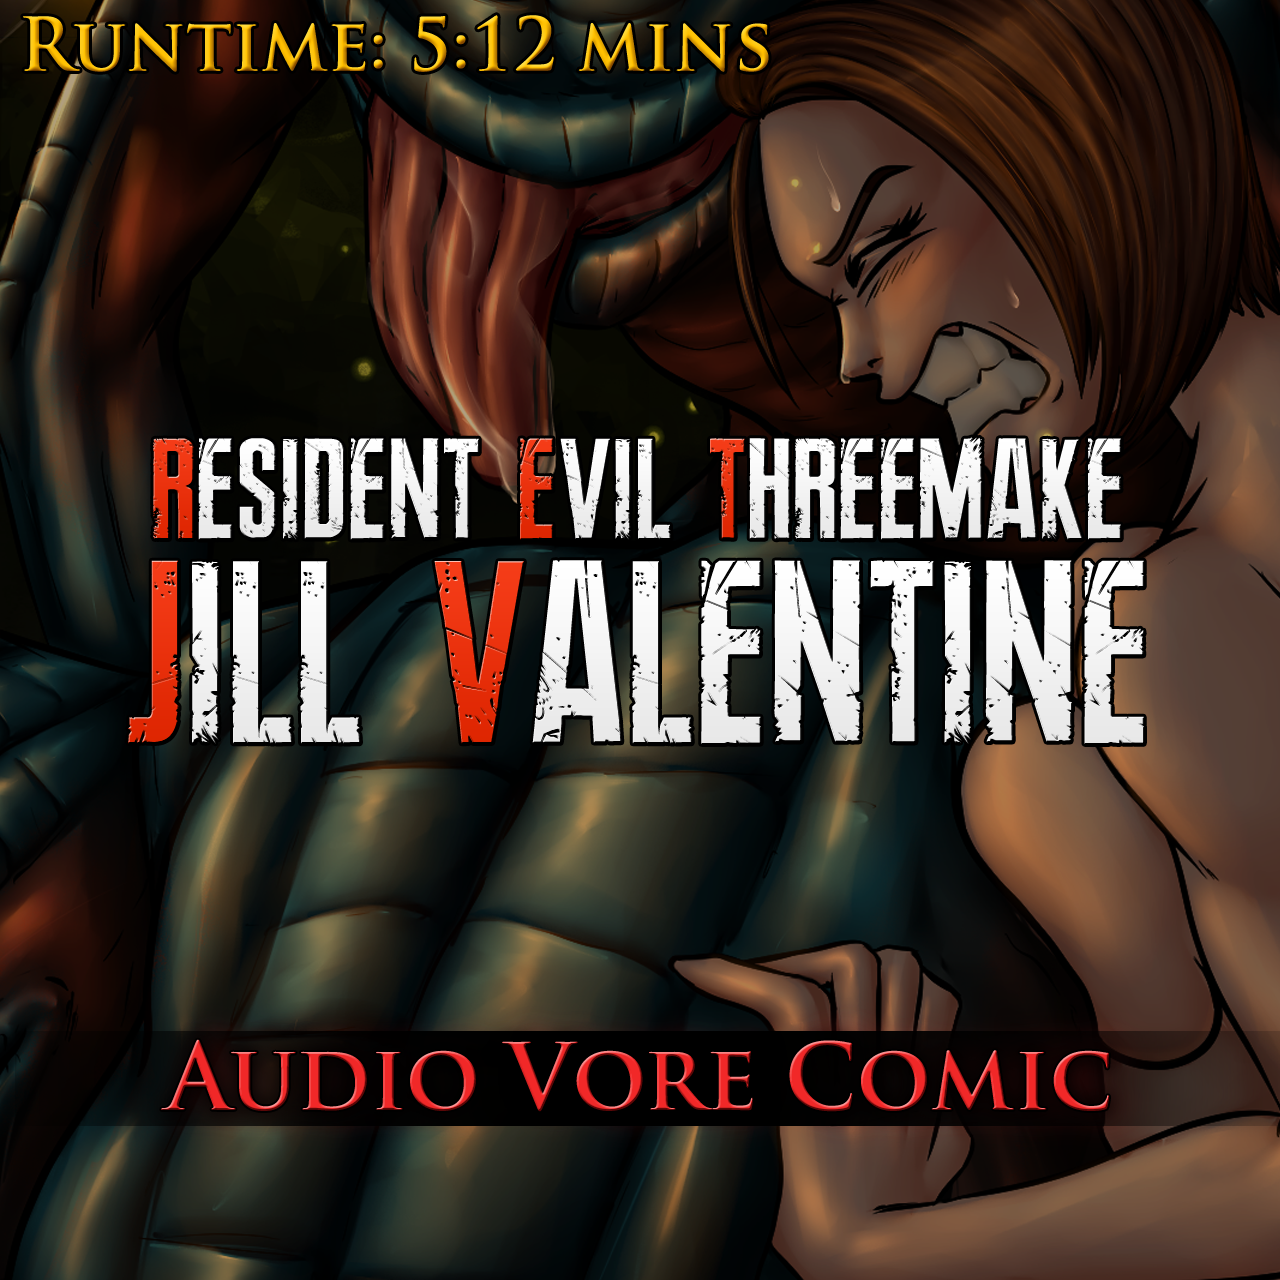 Resident Evil Threemake: Jill Valentine - Audio Vore Comic